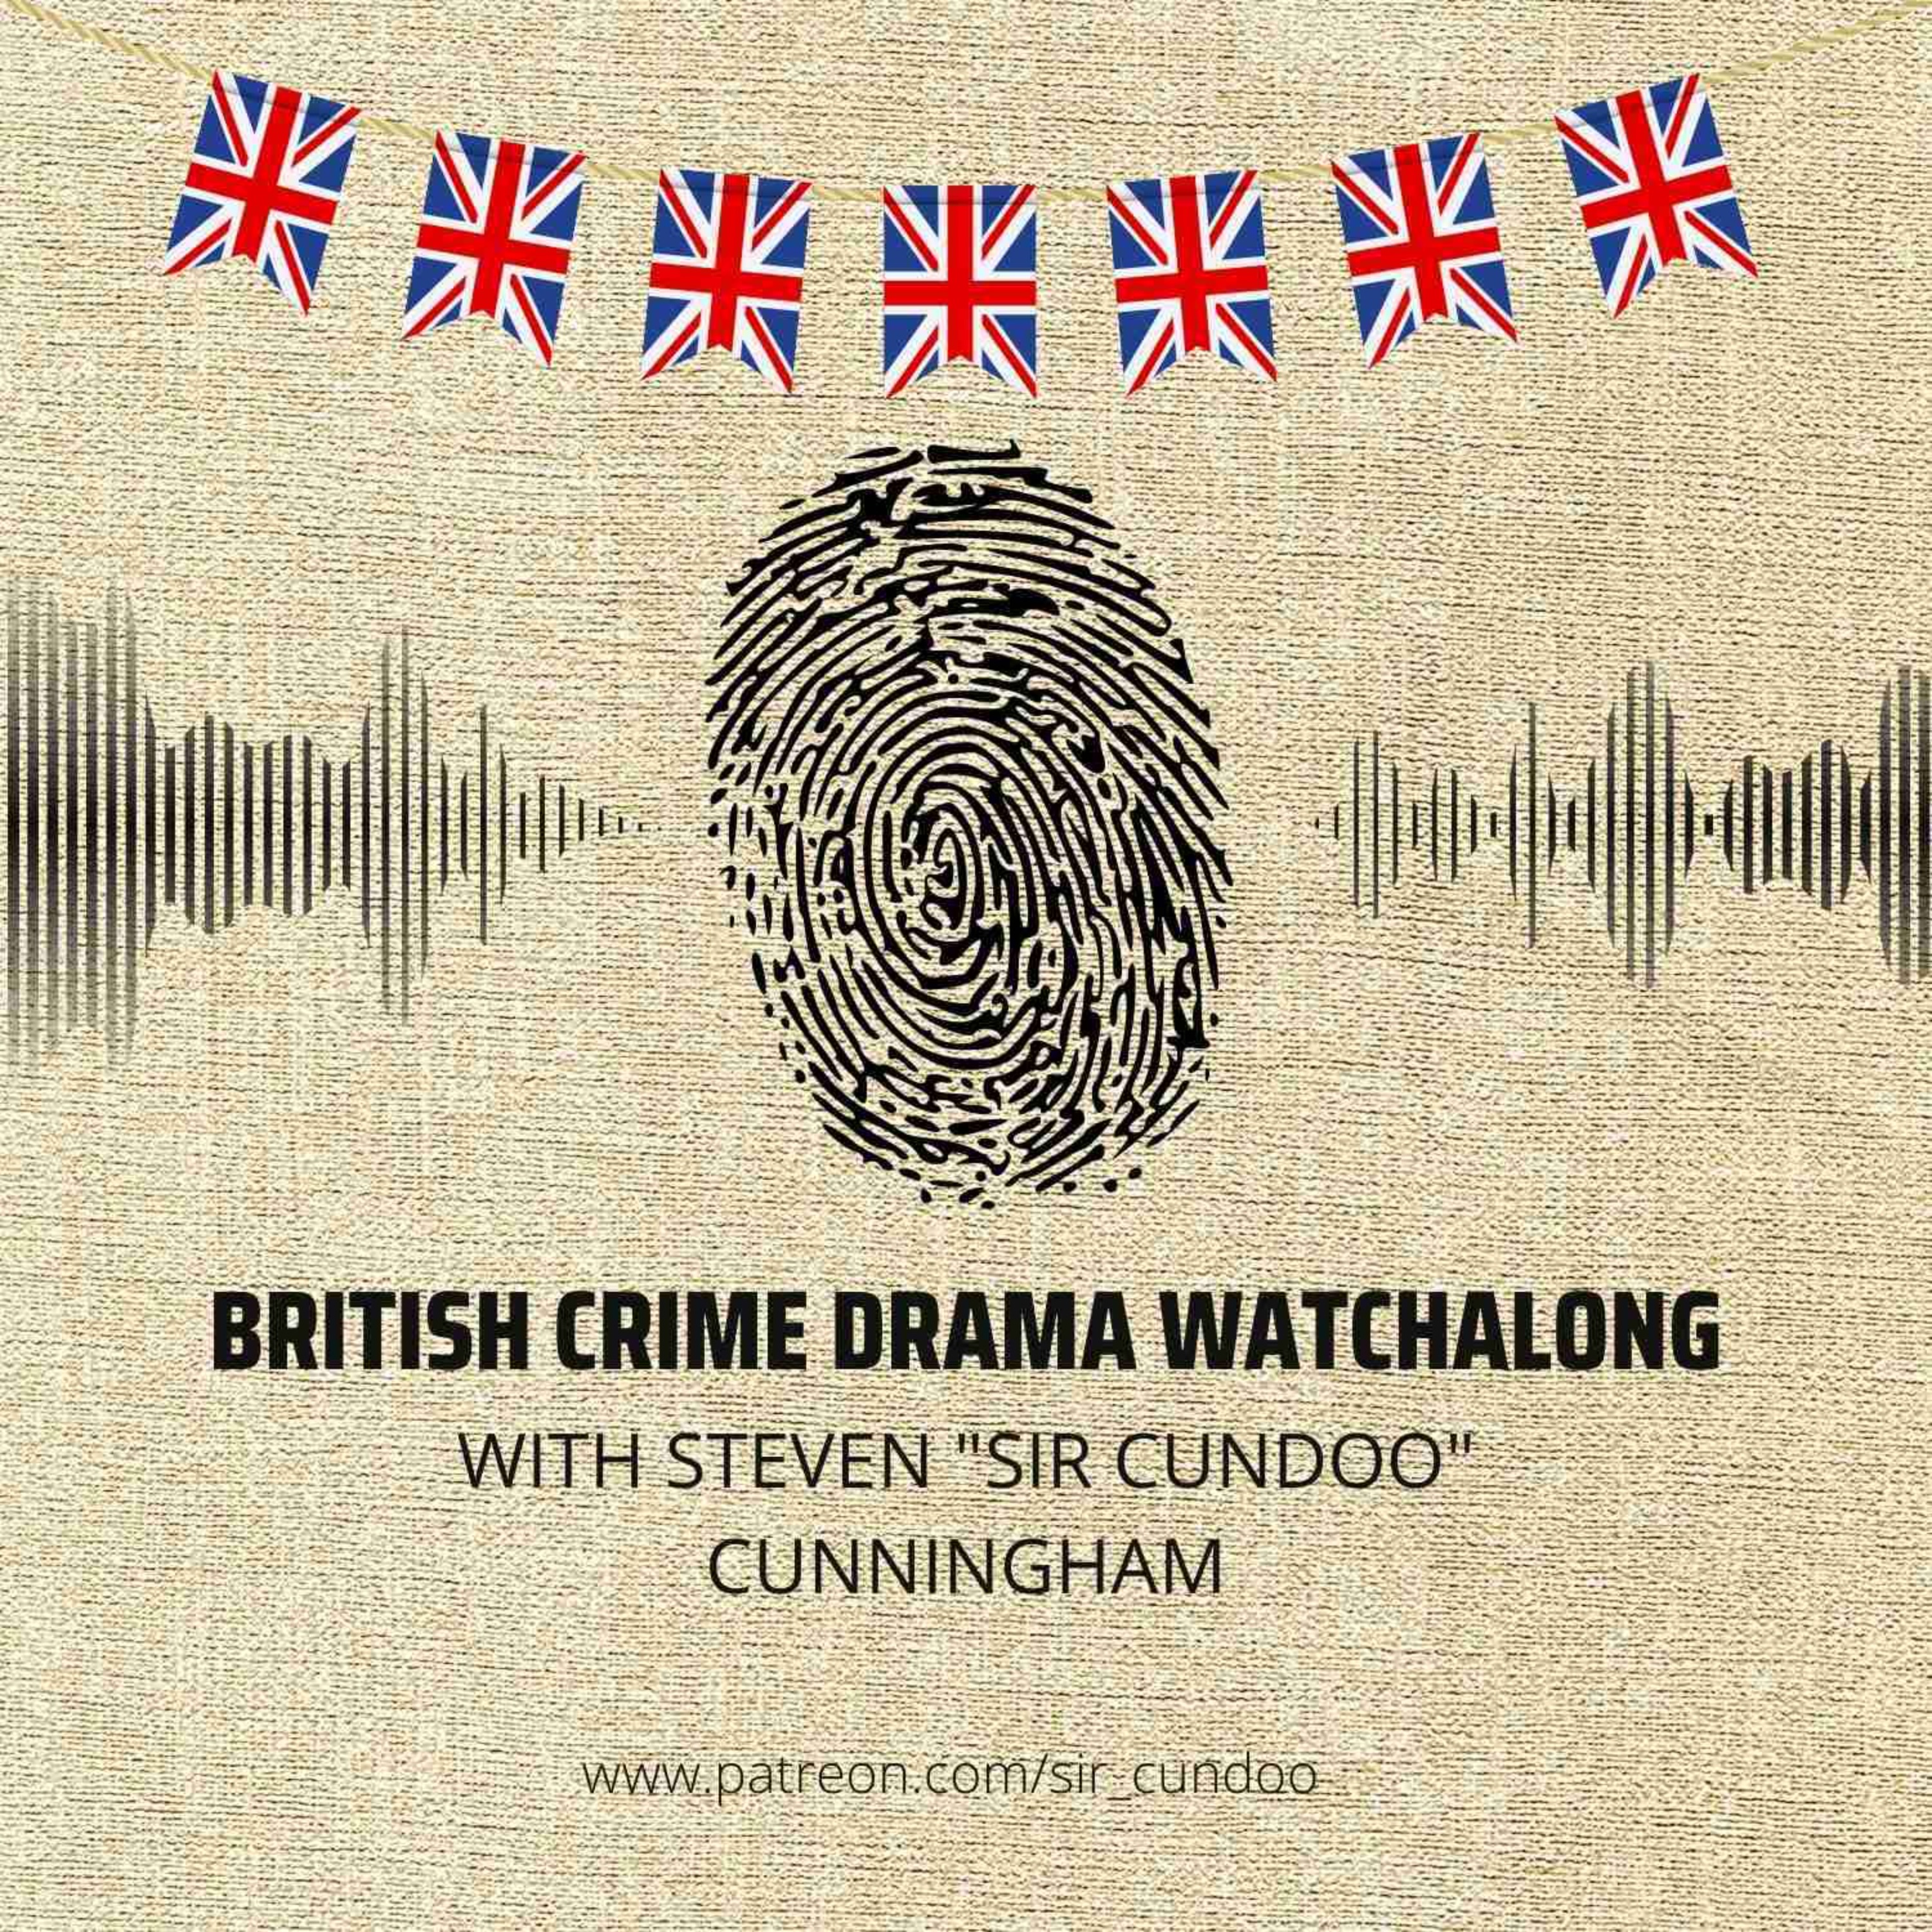 British Crime Drama Watchalong with Steven "Sir Cundoo" Cunningham